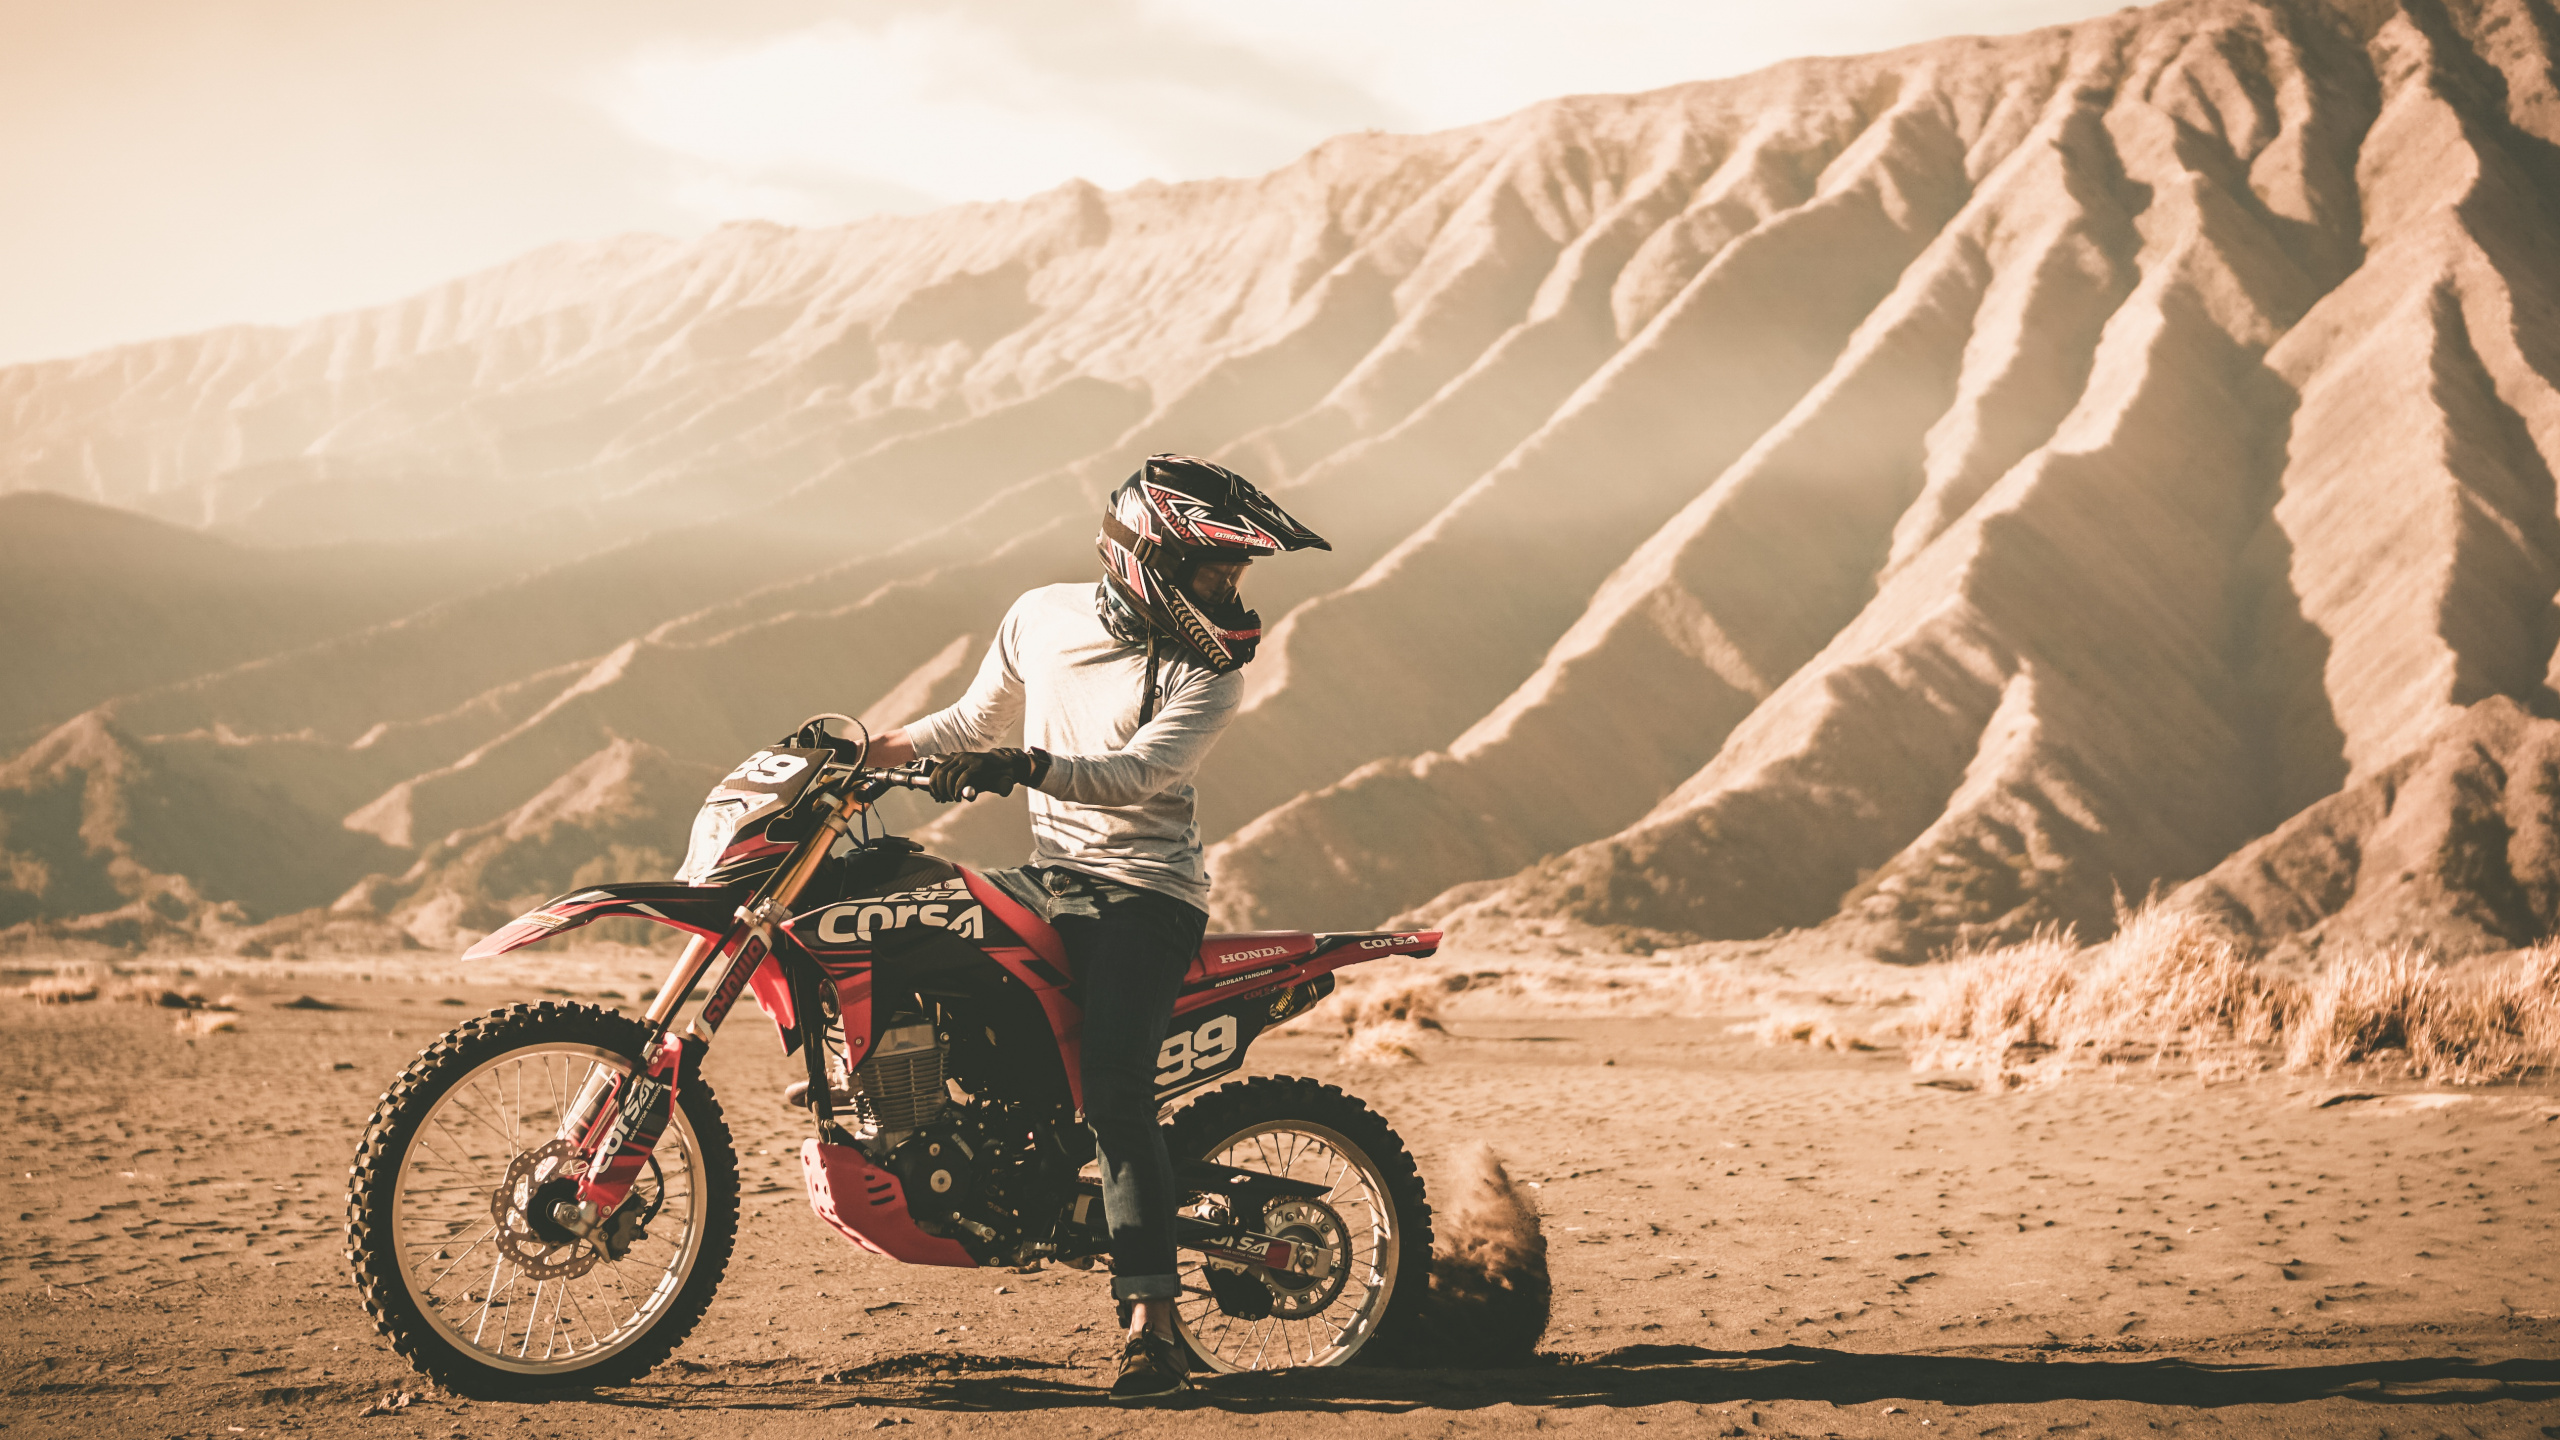 Man Riding Motocross Dirt Bike on Dirt Road During Daytime. Wallpaper in 2560x1440 Resolution